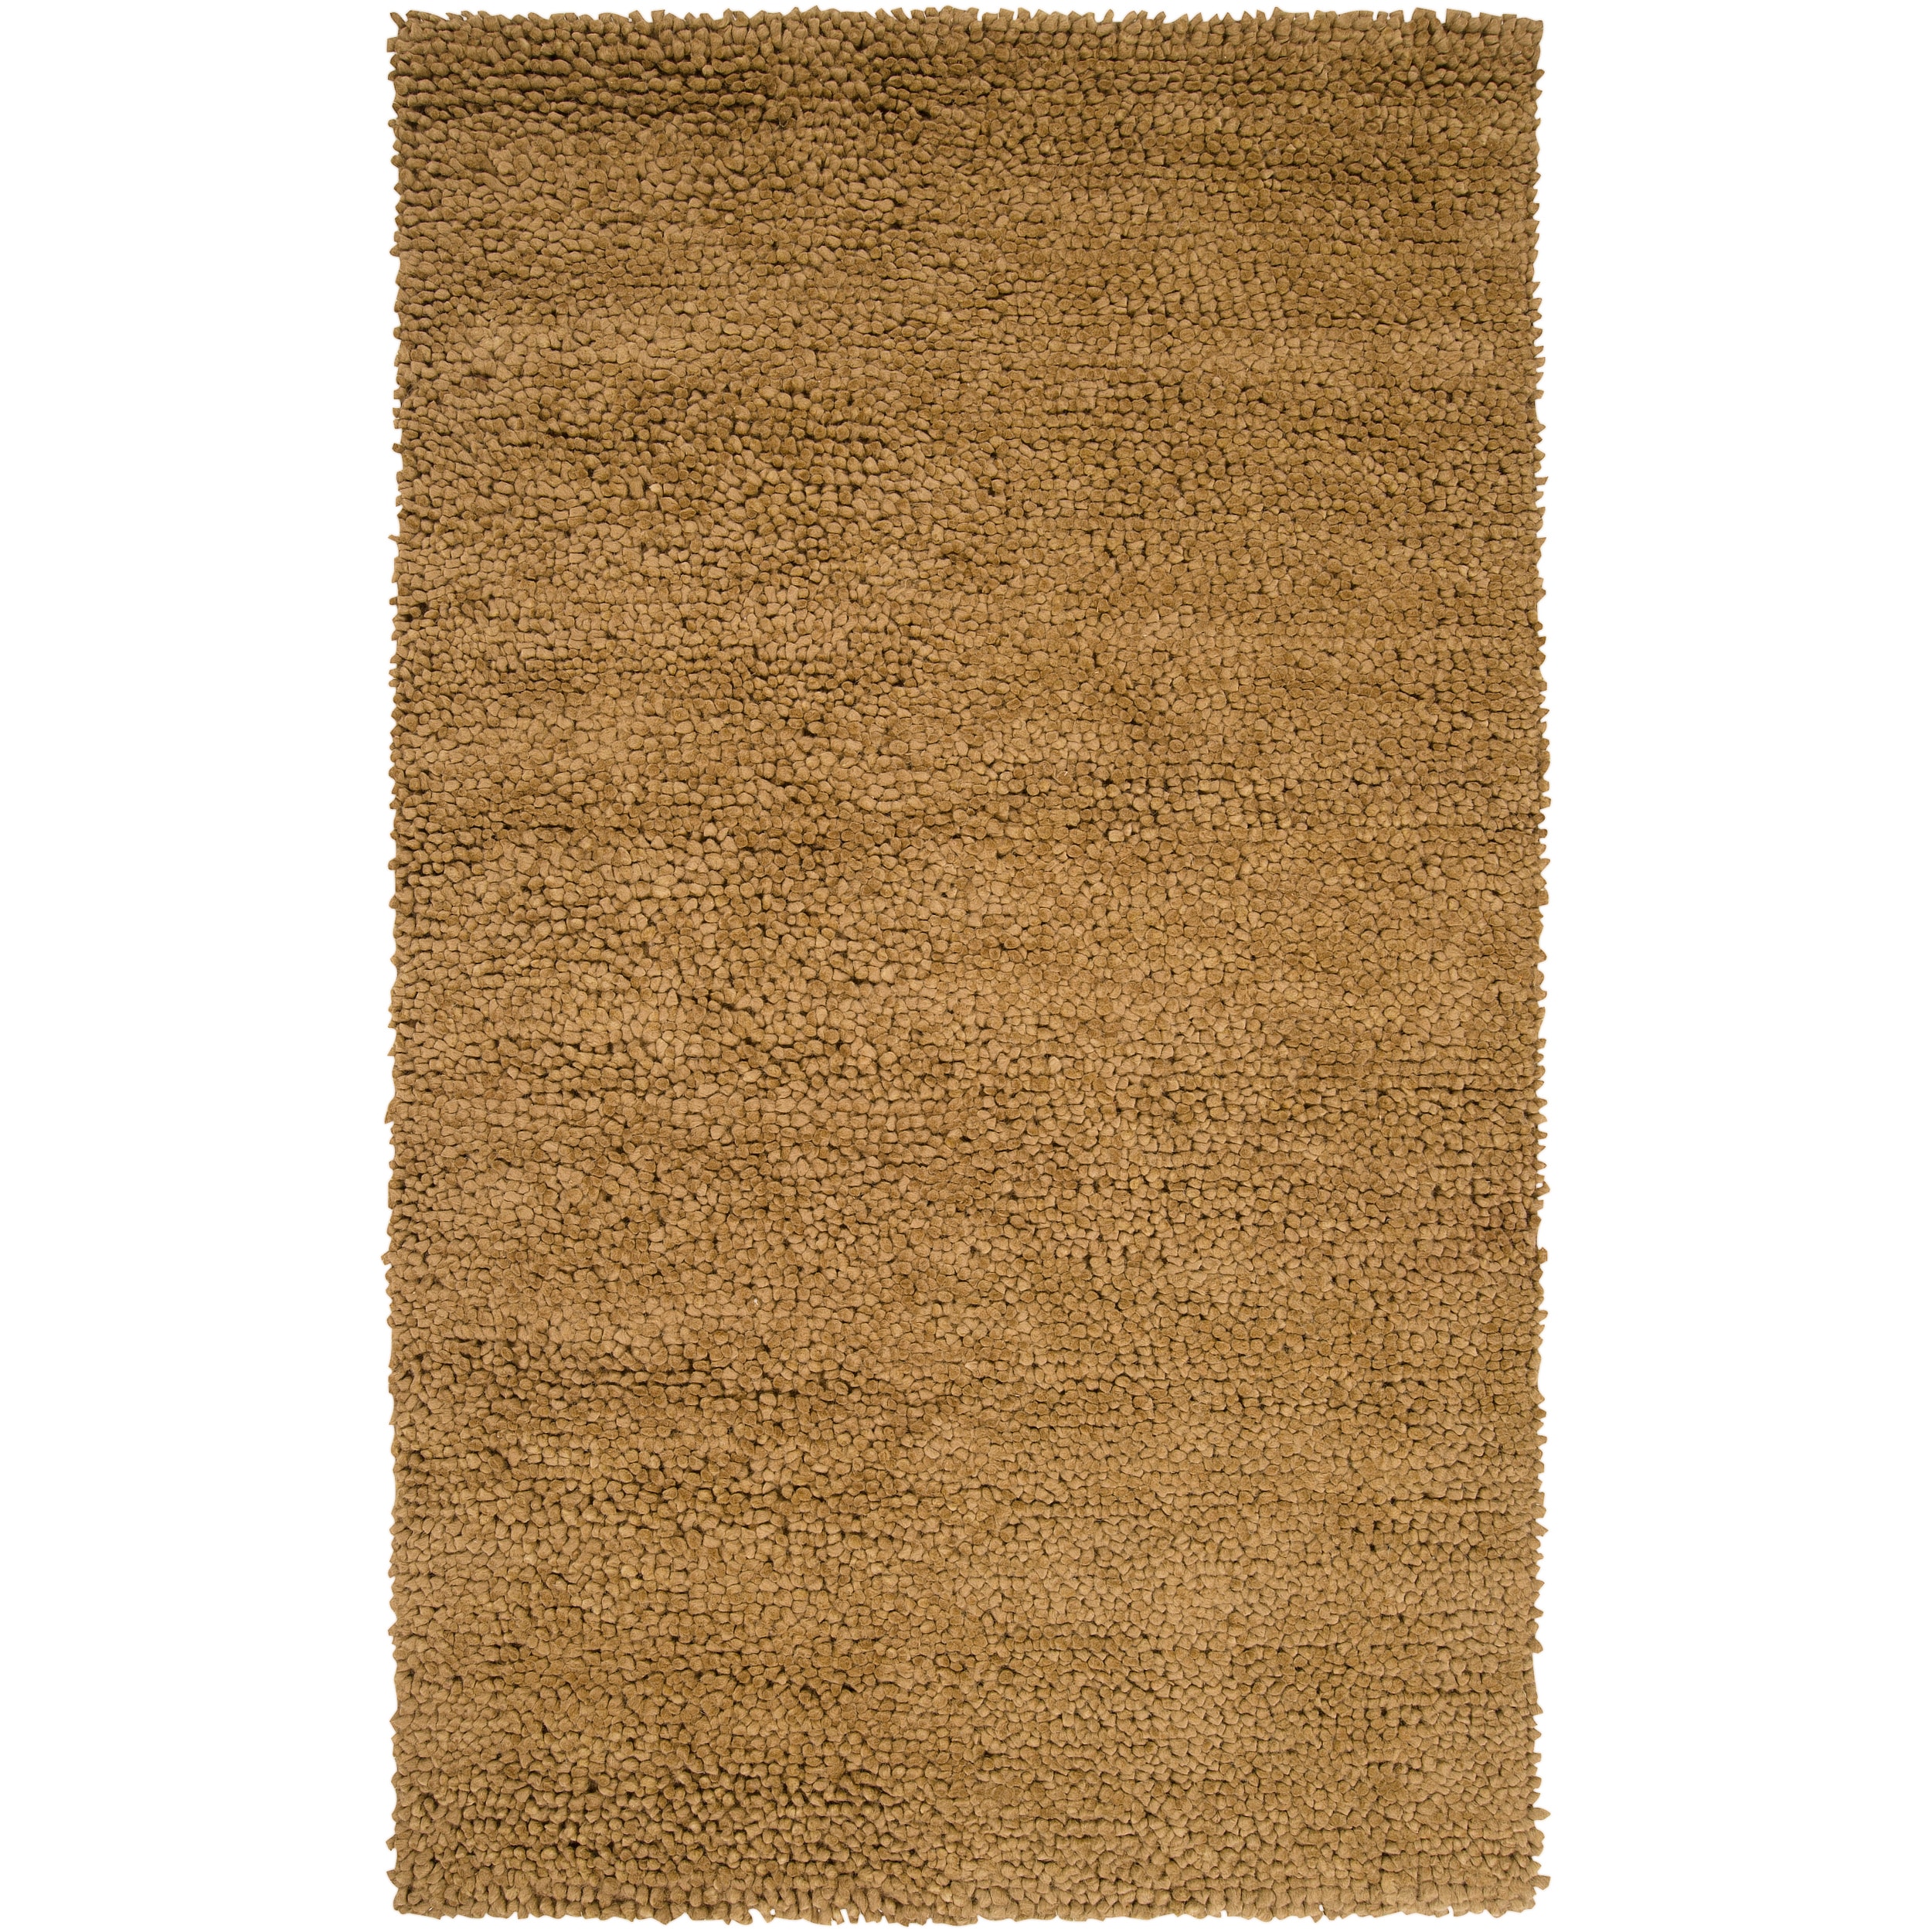 Surya Carpet, Inc. Hand woven New Zealand Felted Wool Plush Shag Area Rug (9 X 12) Beige Size 9 x 12